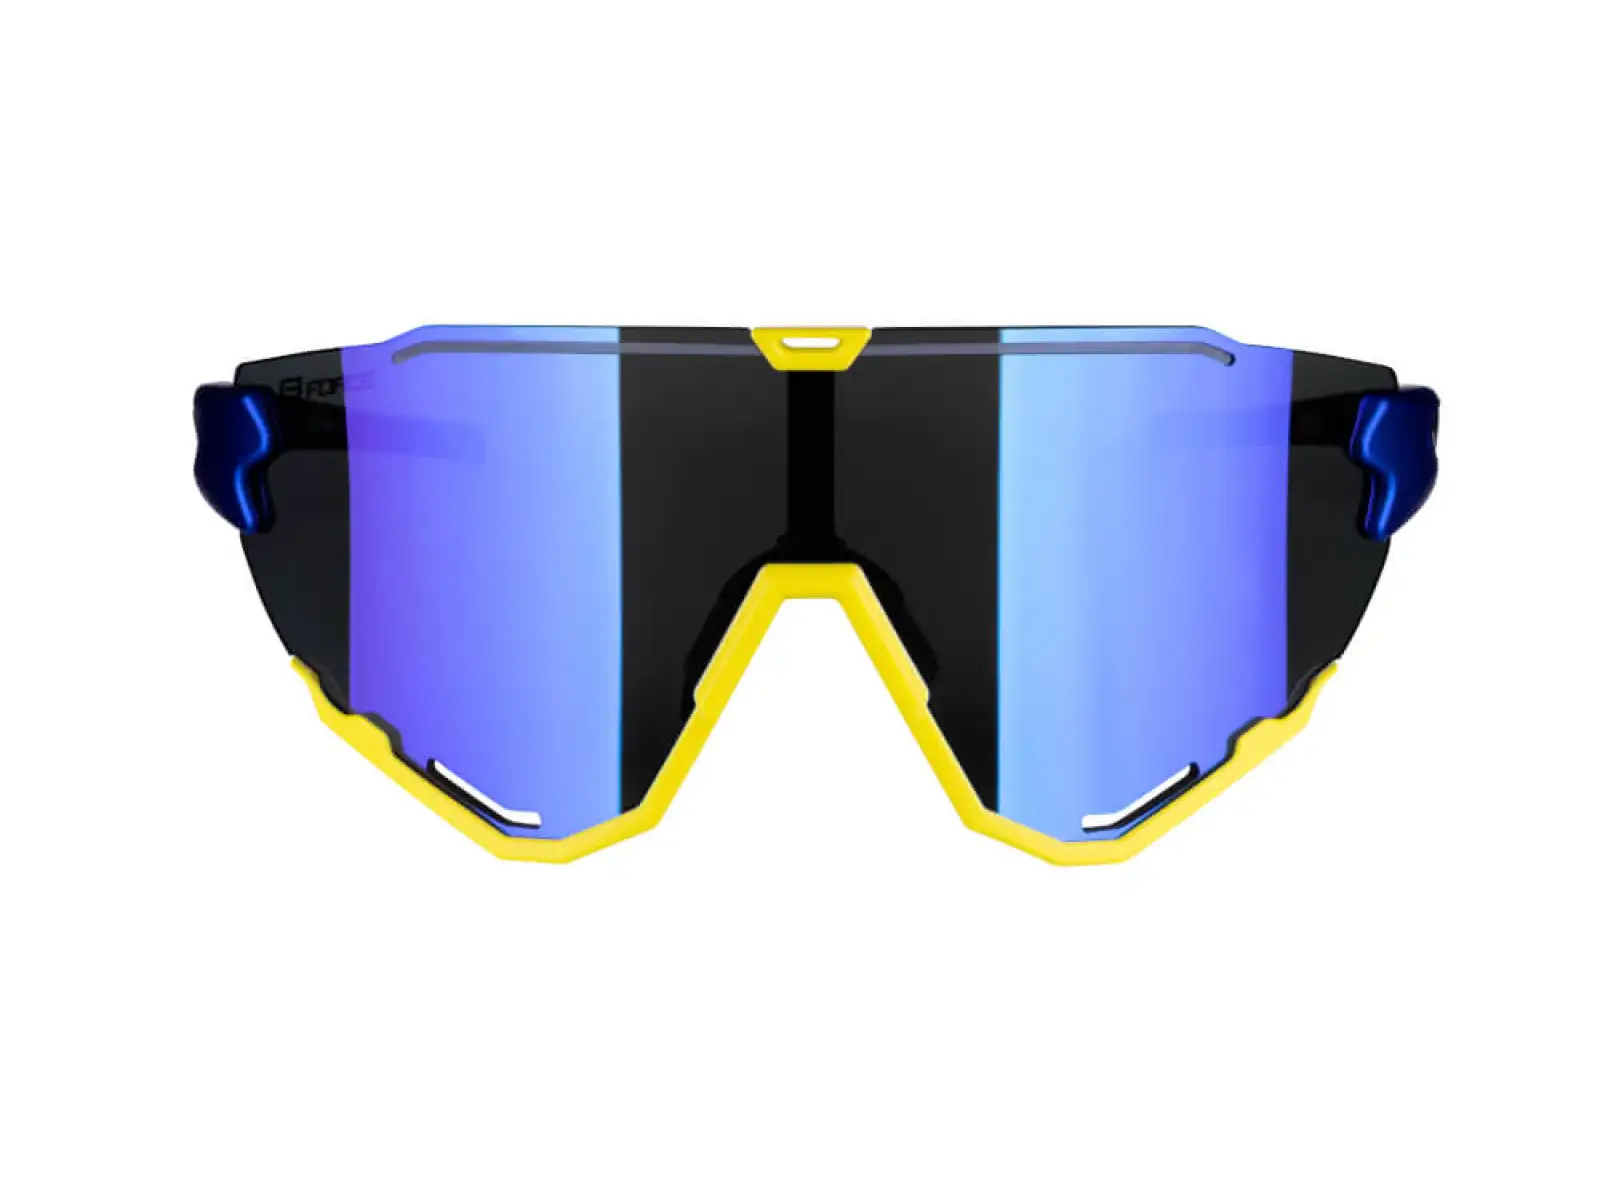 Force Creed brýle fluo/modrá/modrá revo skla